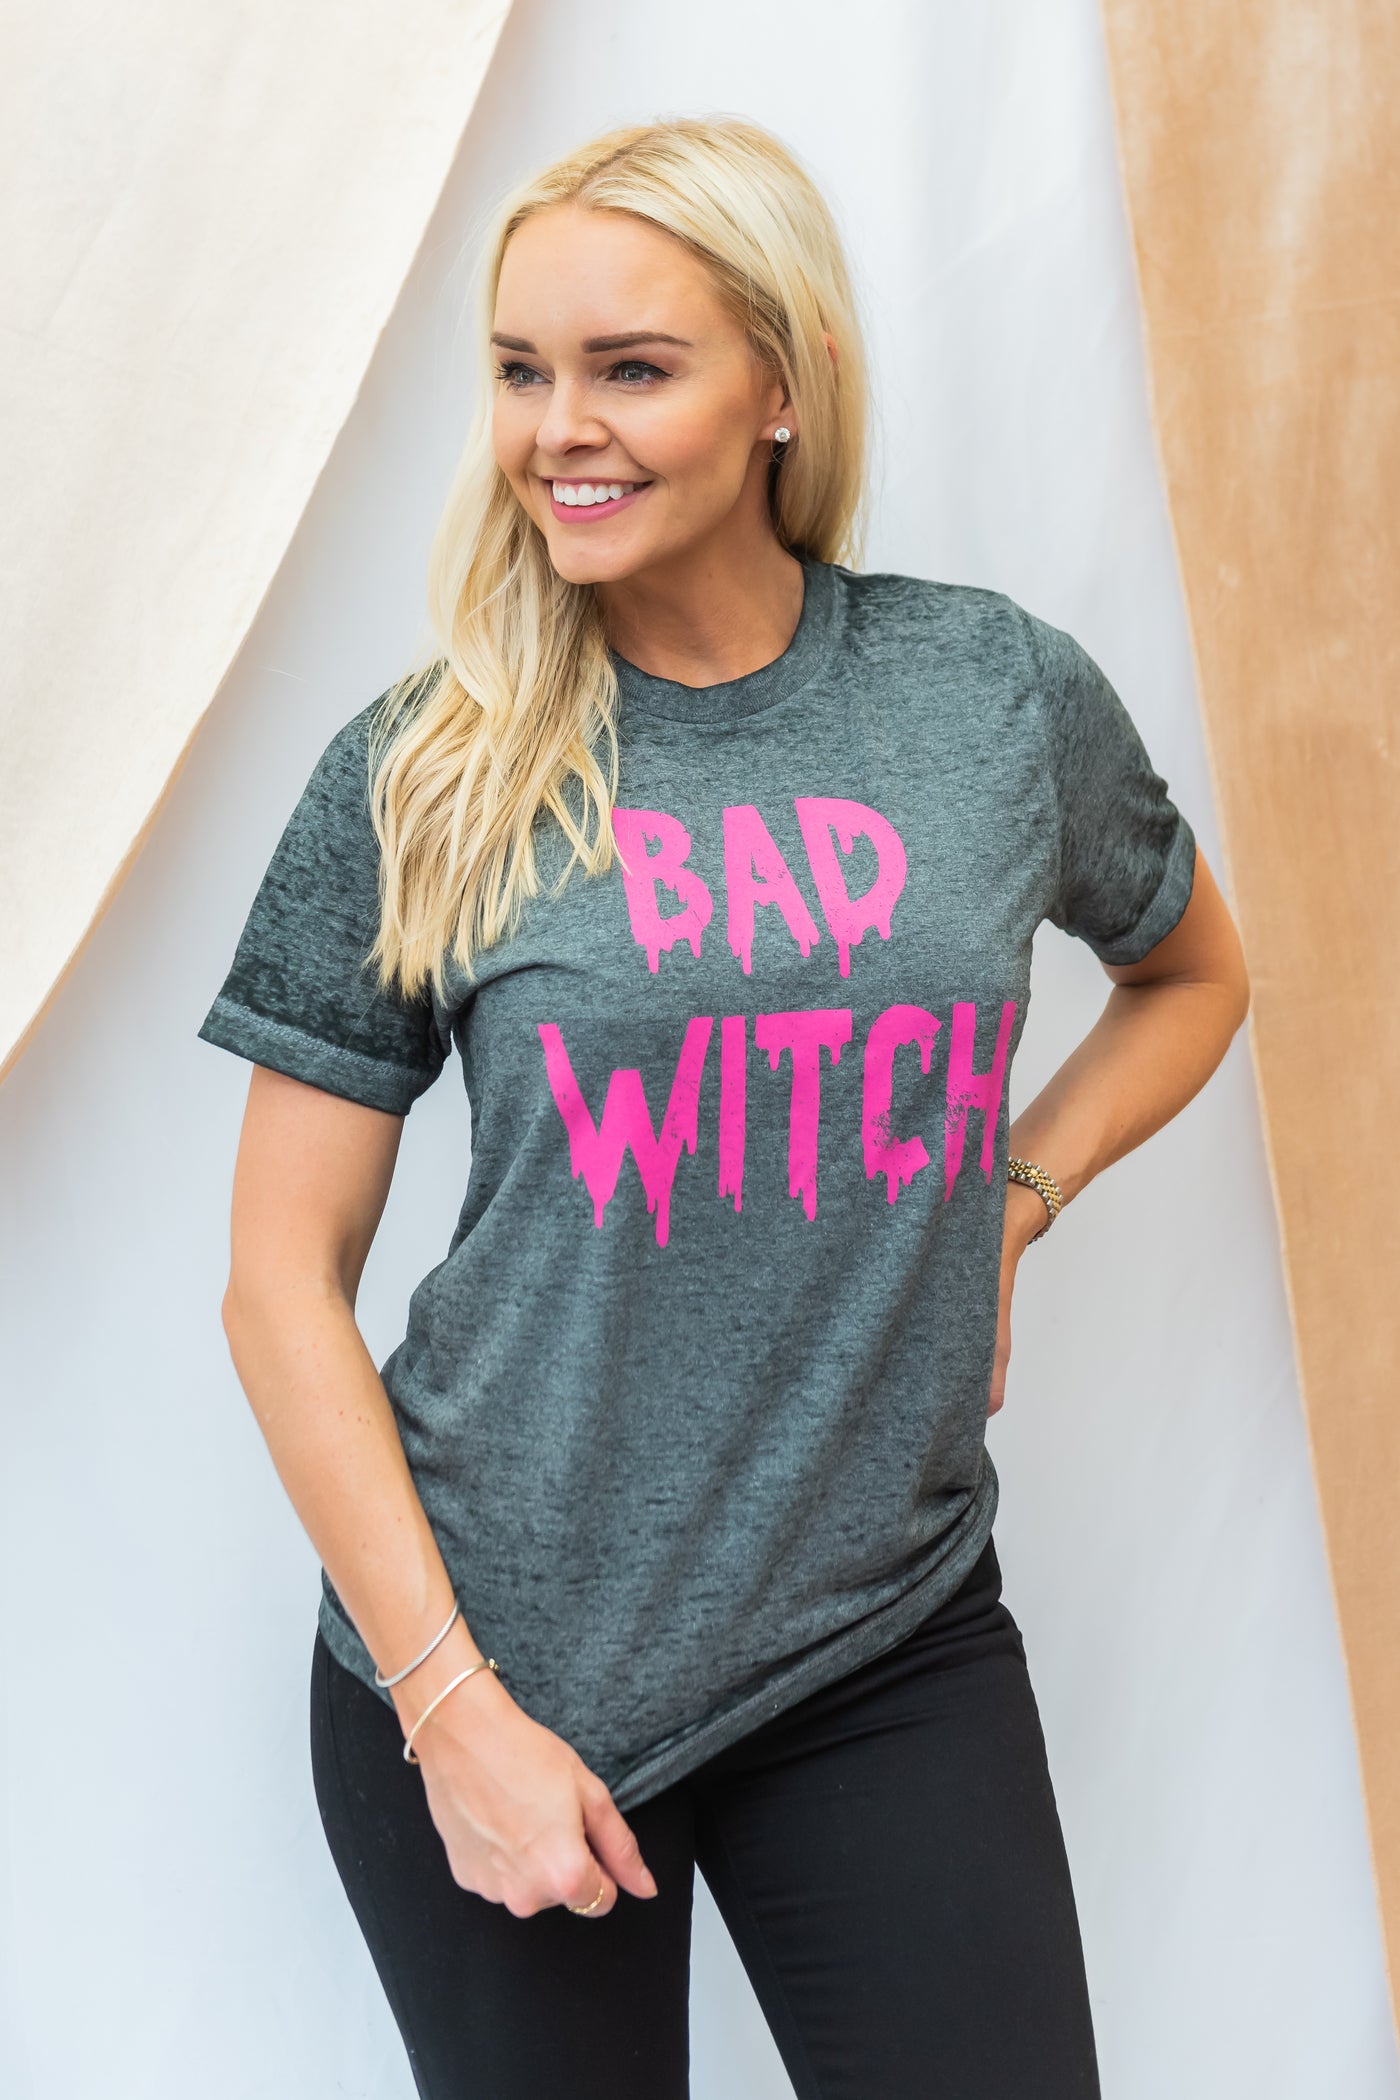 Bad Witch Tee (Medium) - FINAL SALE